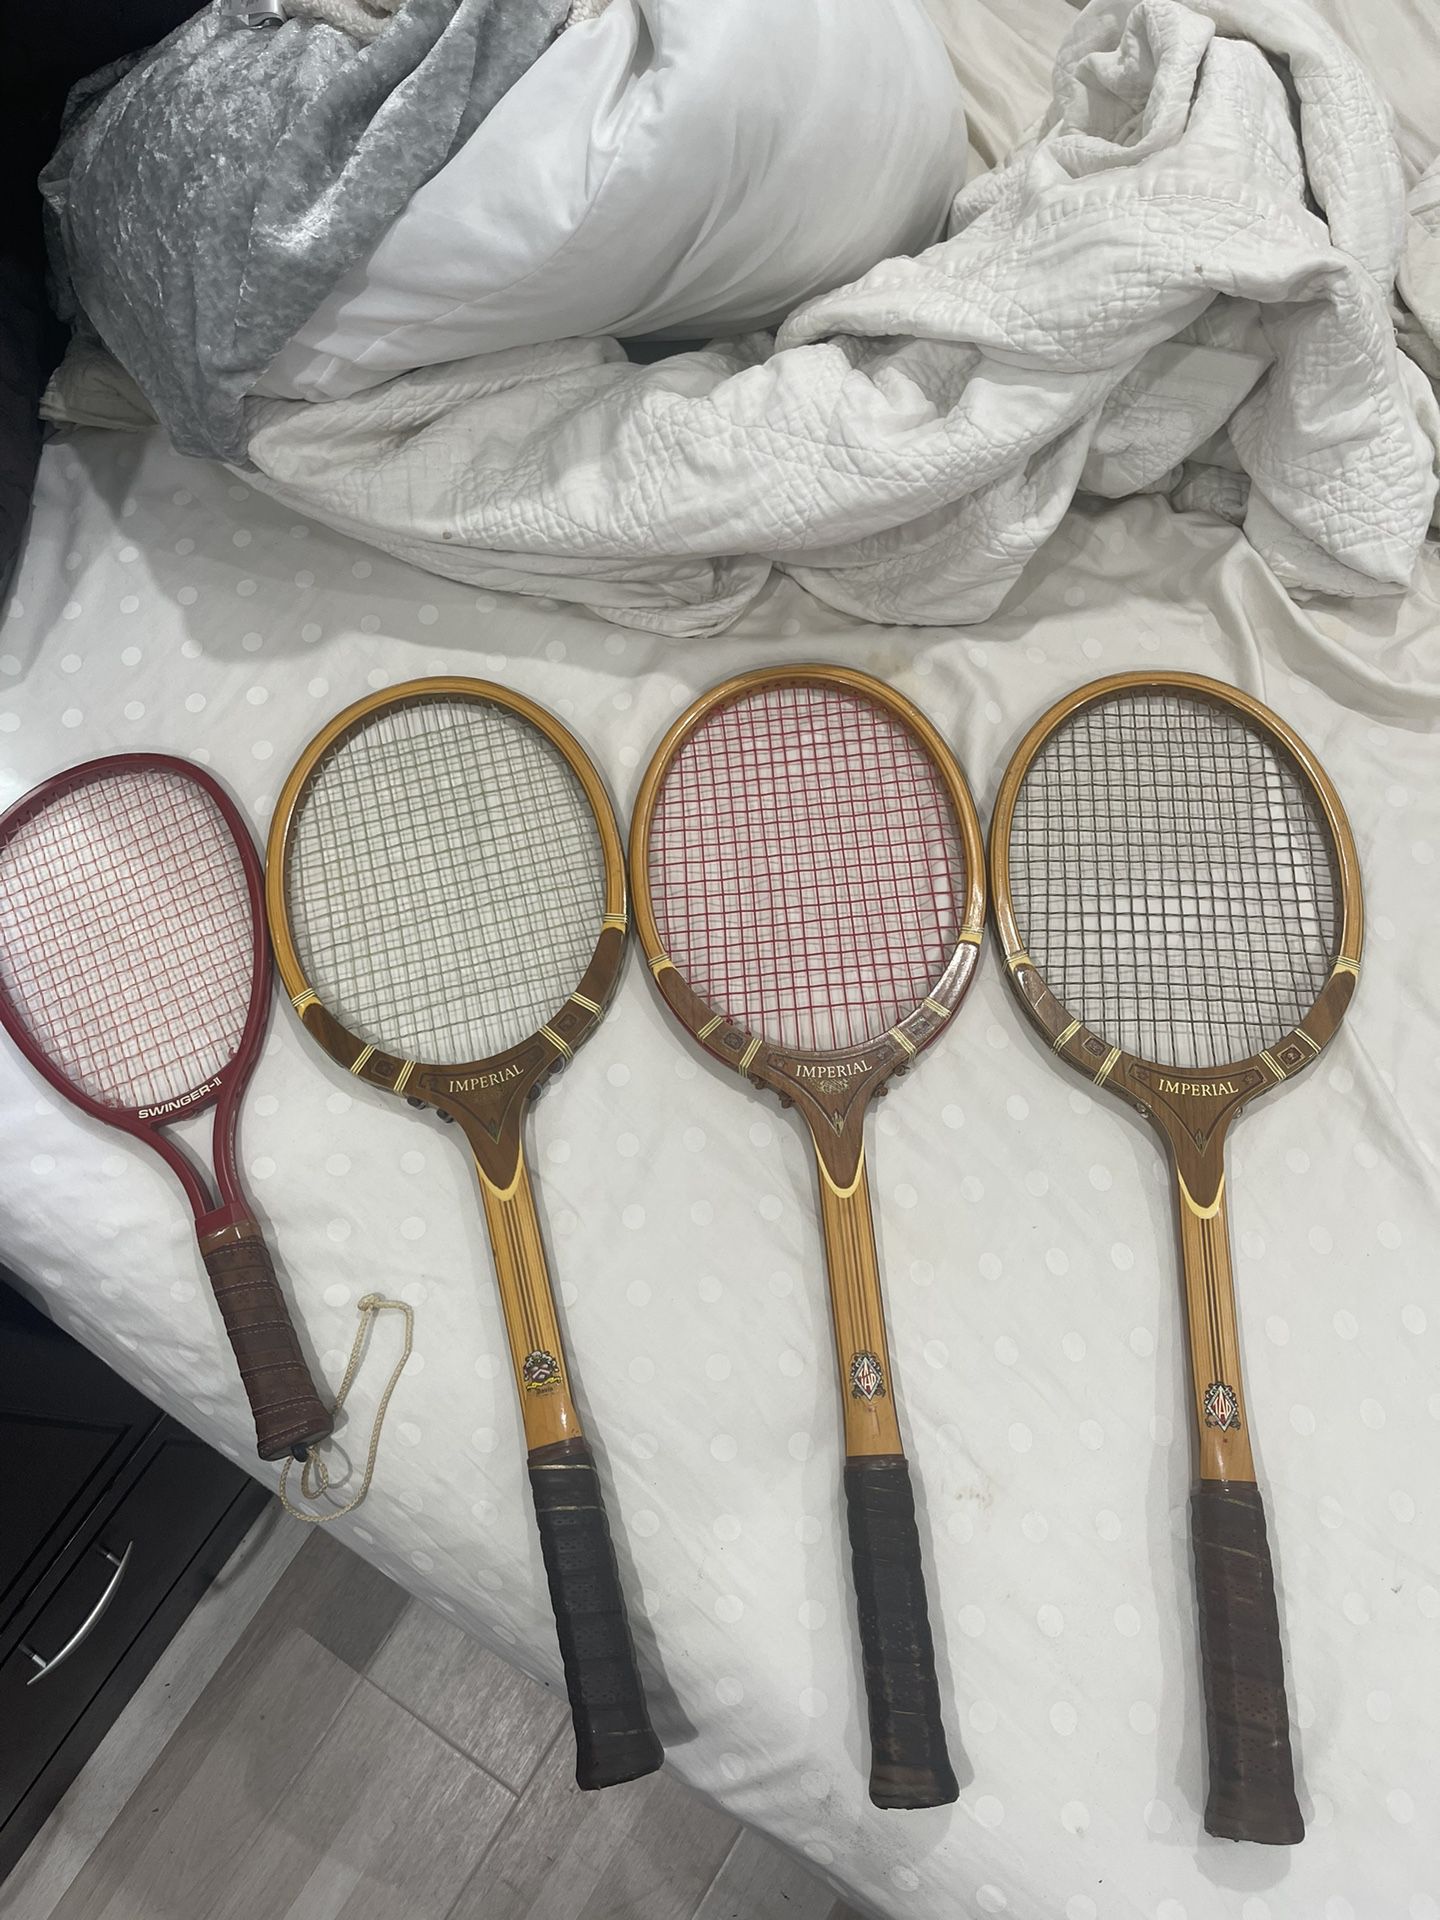 Davis, Billie Jean Tennis, Prince Triple X P5 Tennis Rackets 